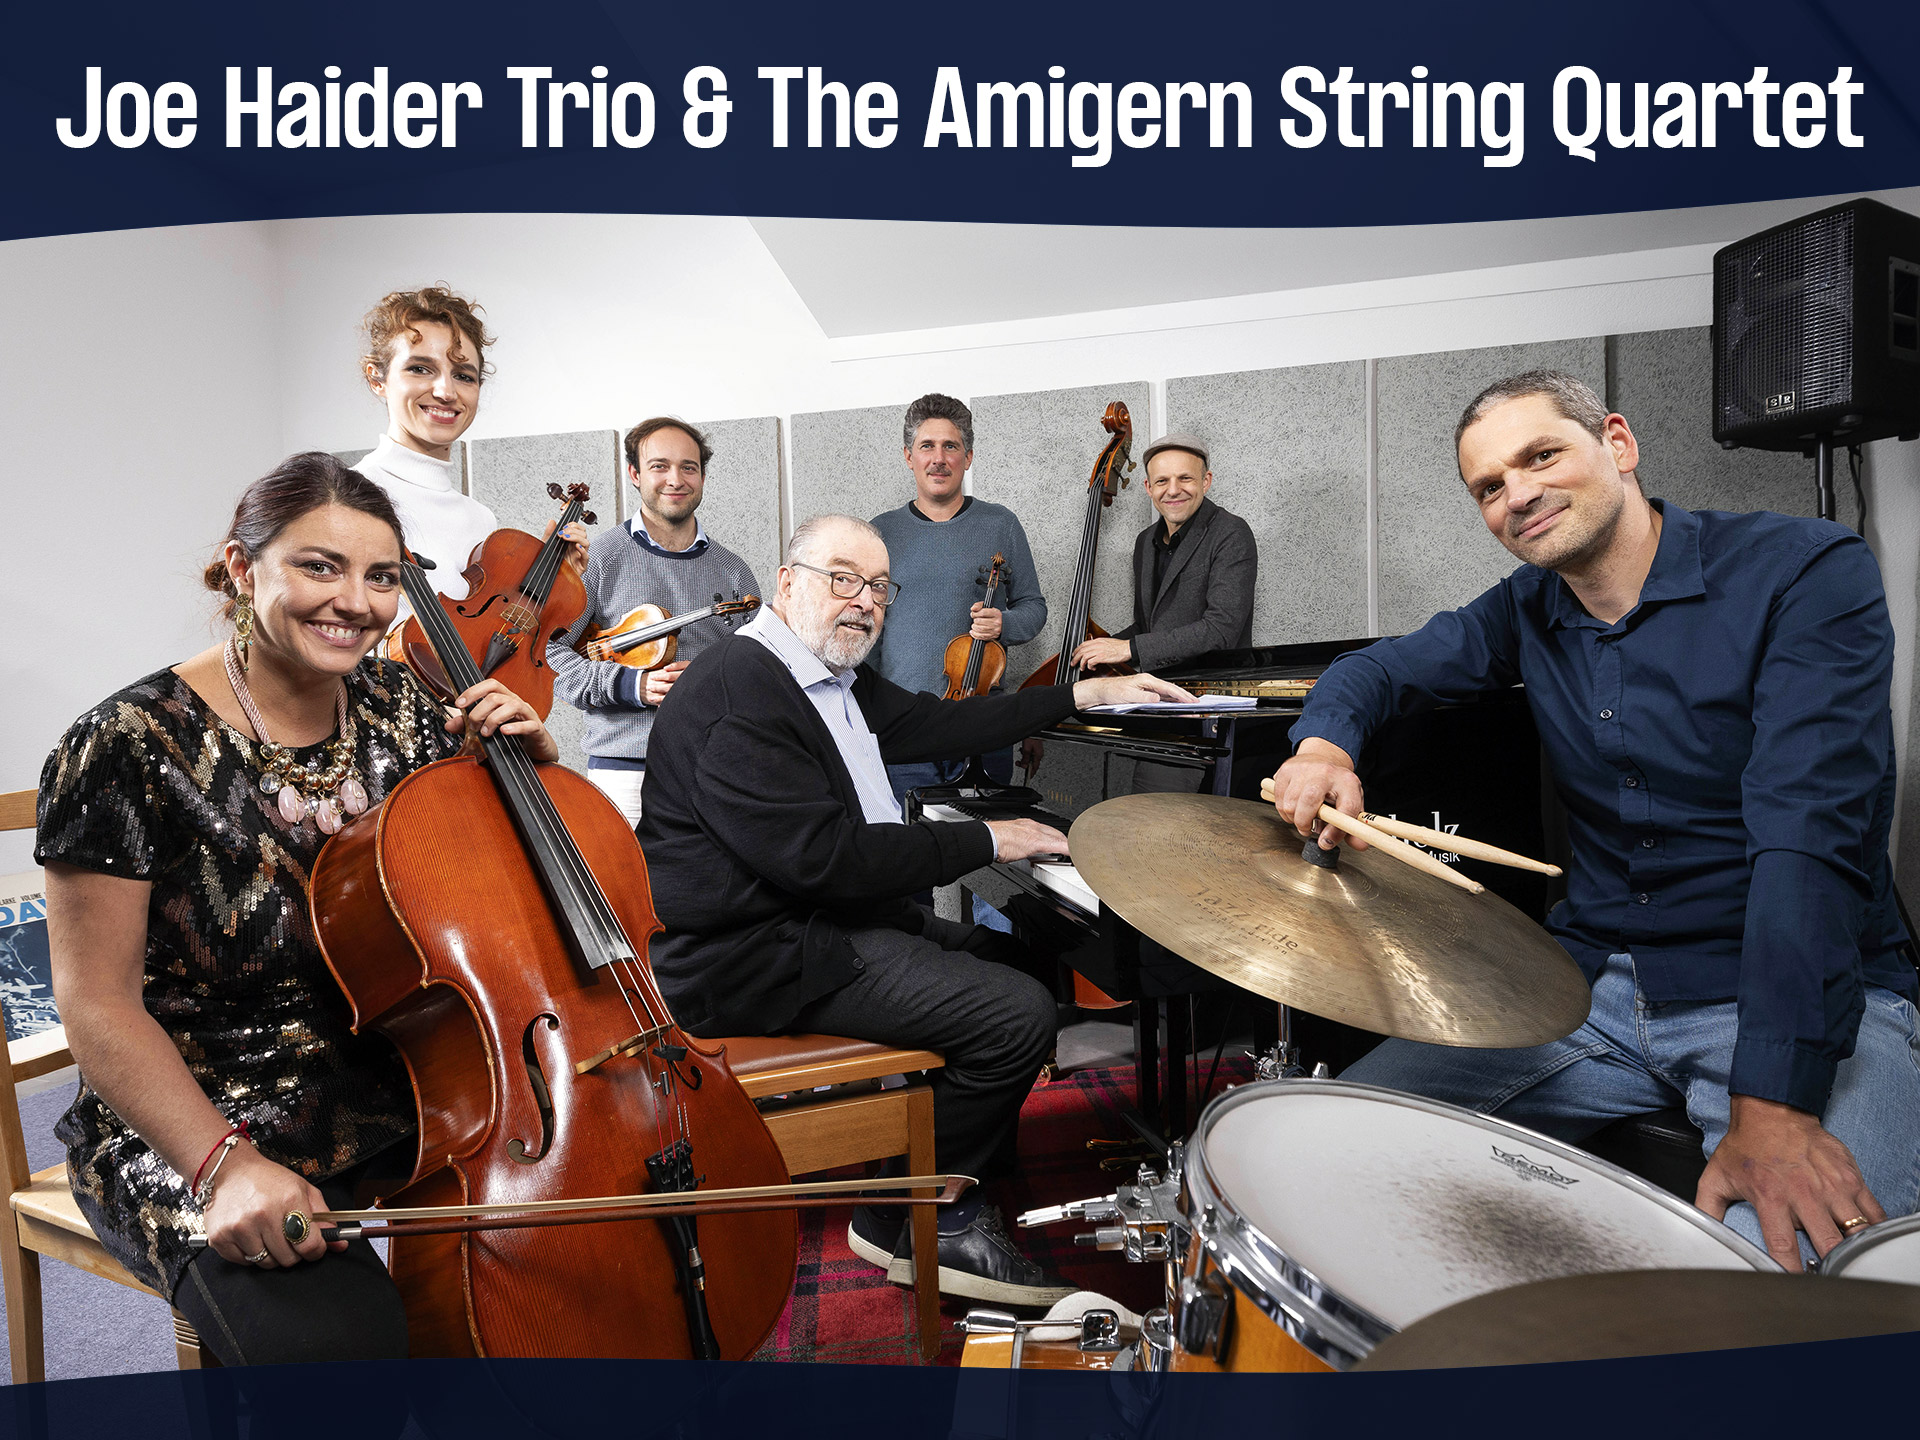 Joe Haider Trio & The Amigern String Quartet